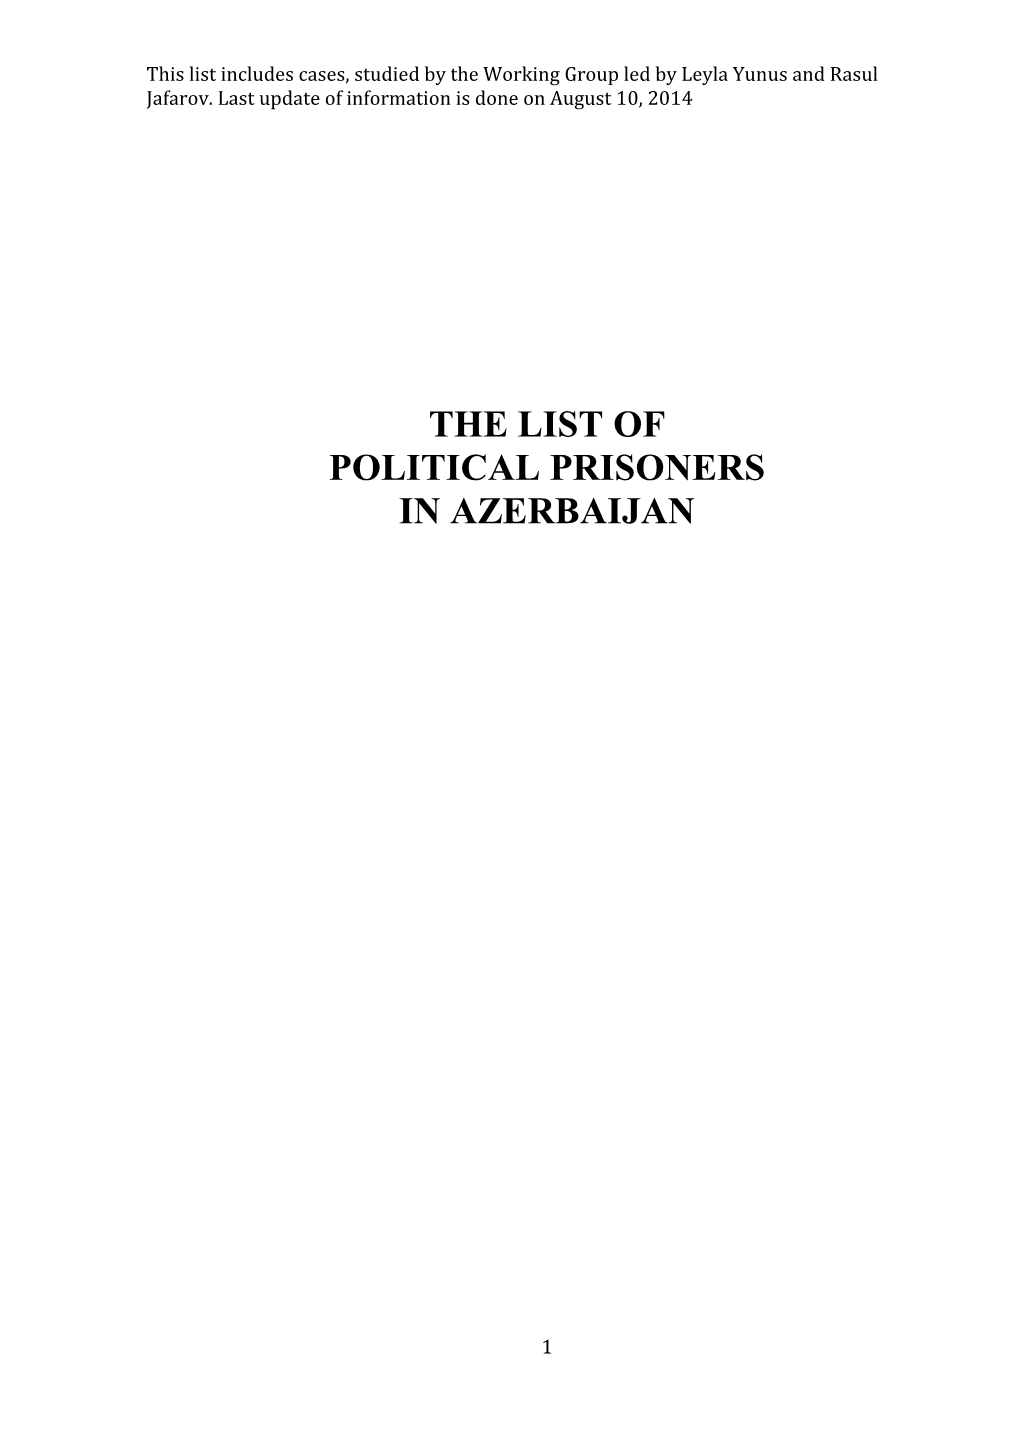 The List of Political Prisoners in Azerbaijan